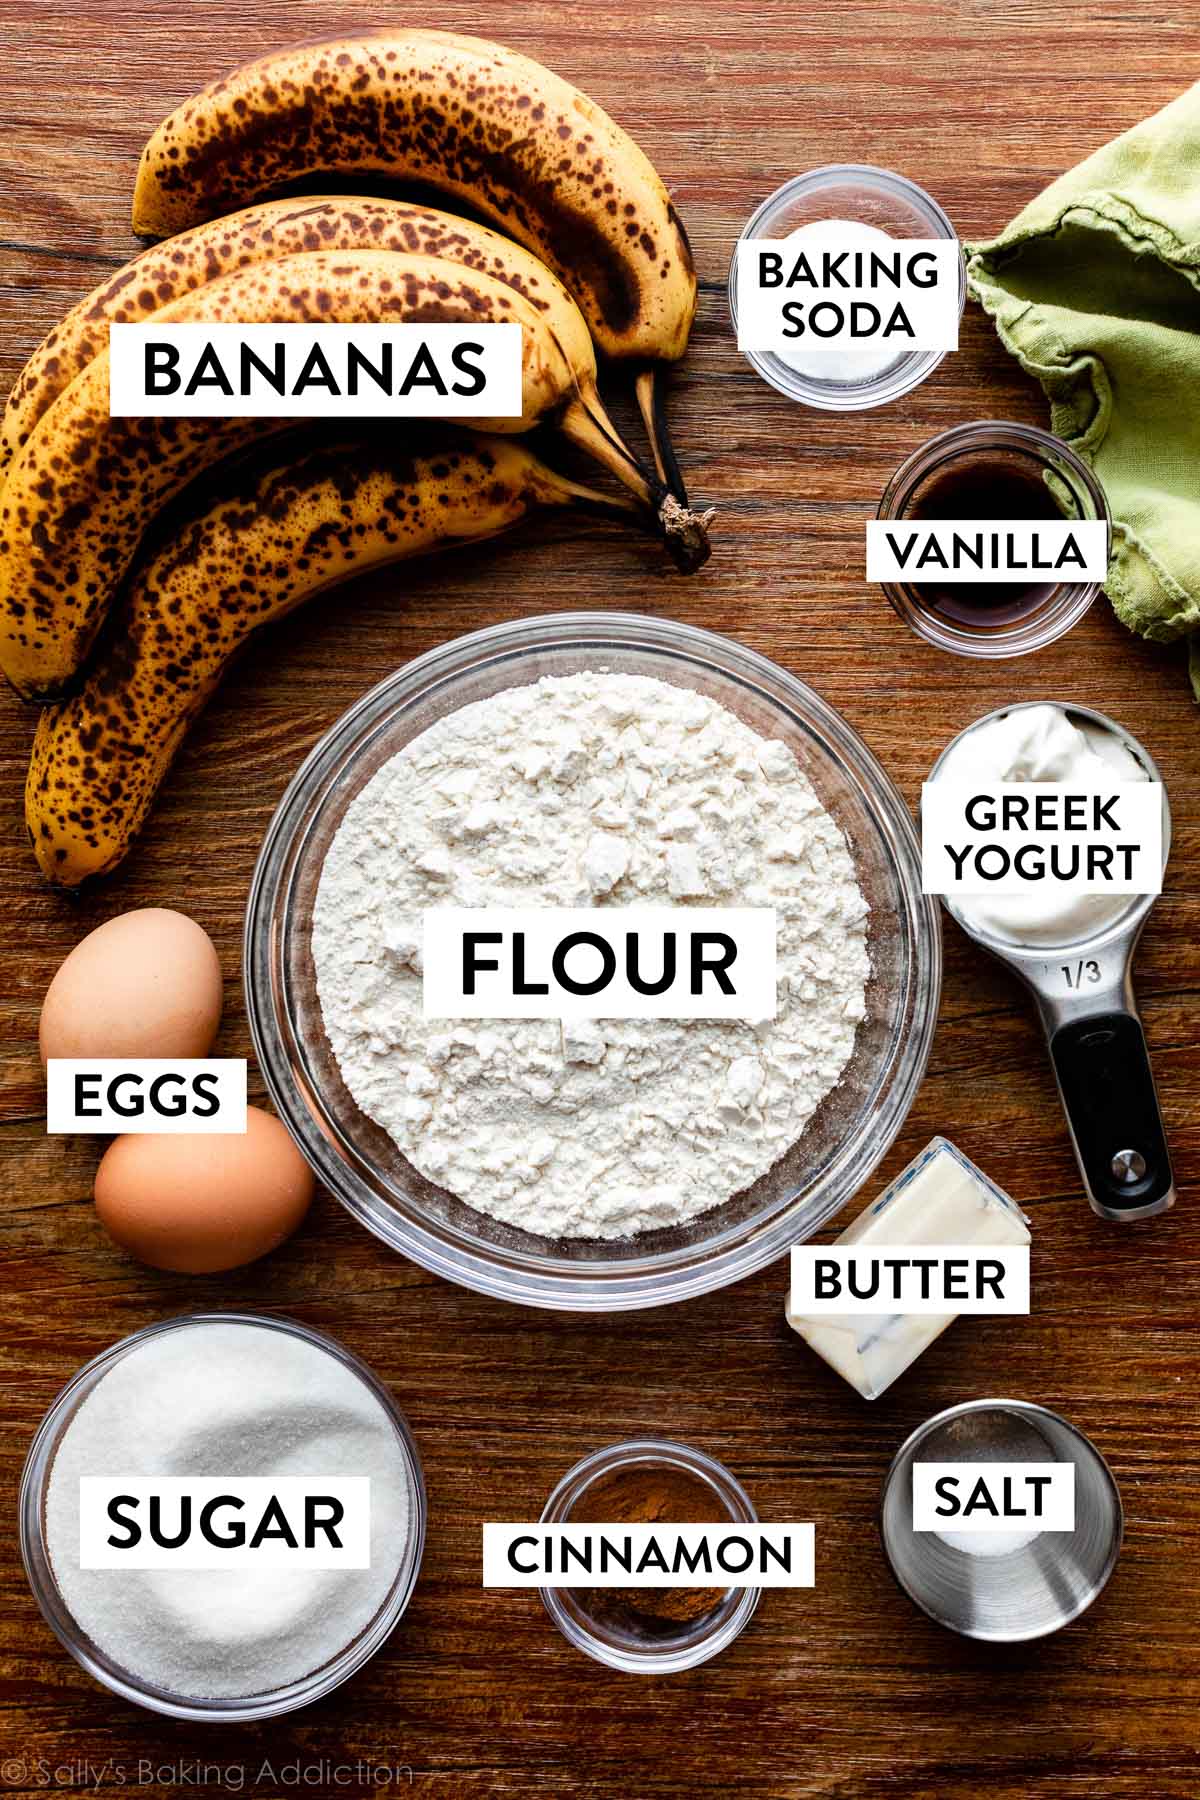 flour, butter, Greek yogurt, vanilla, baking soda, bananas, eggs, and other ingredients on wooden backdrop.